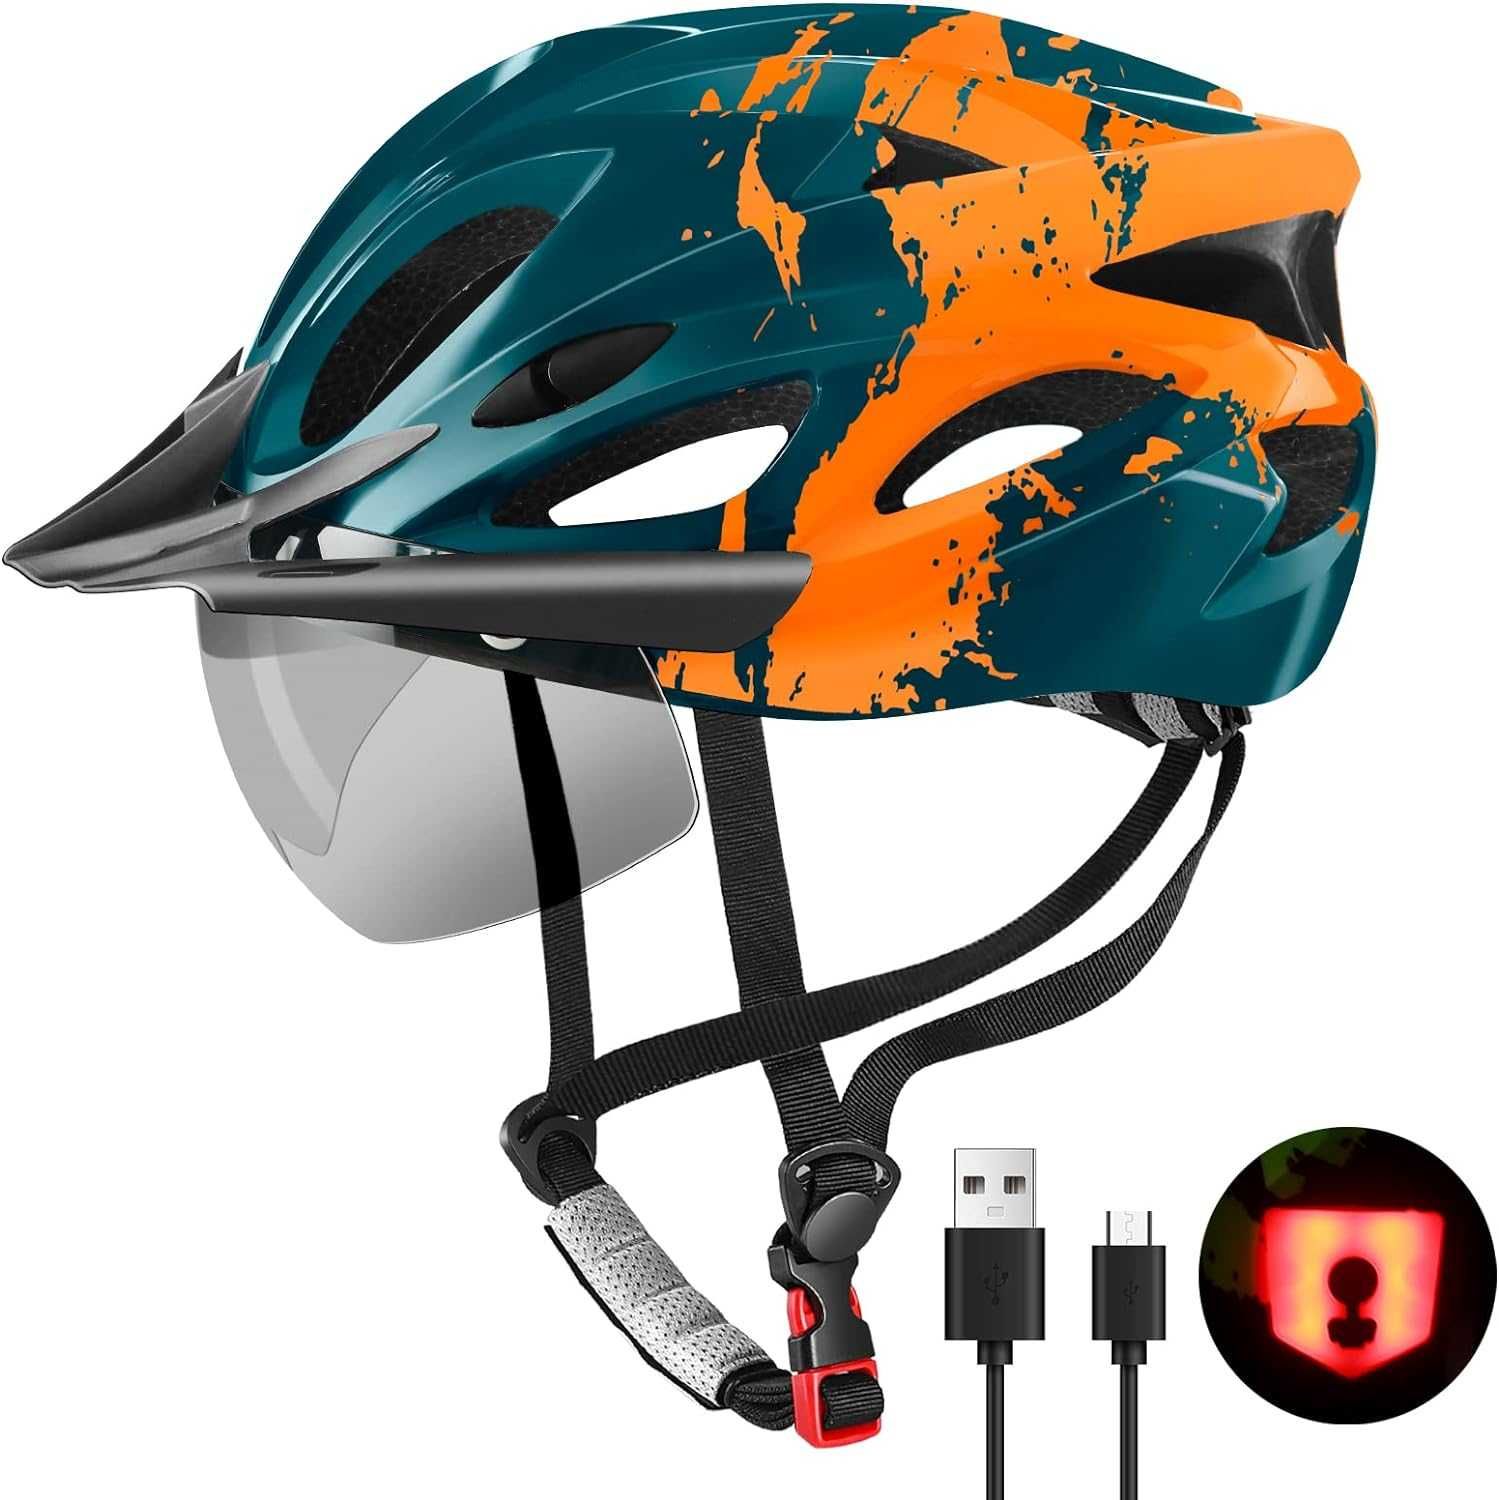 Casca protectie cu ochelari Helmet pentru Trotineta sau Bicicleta